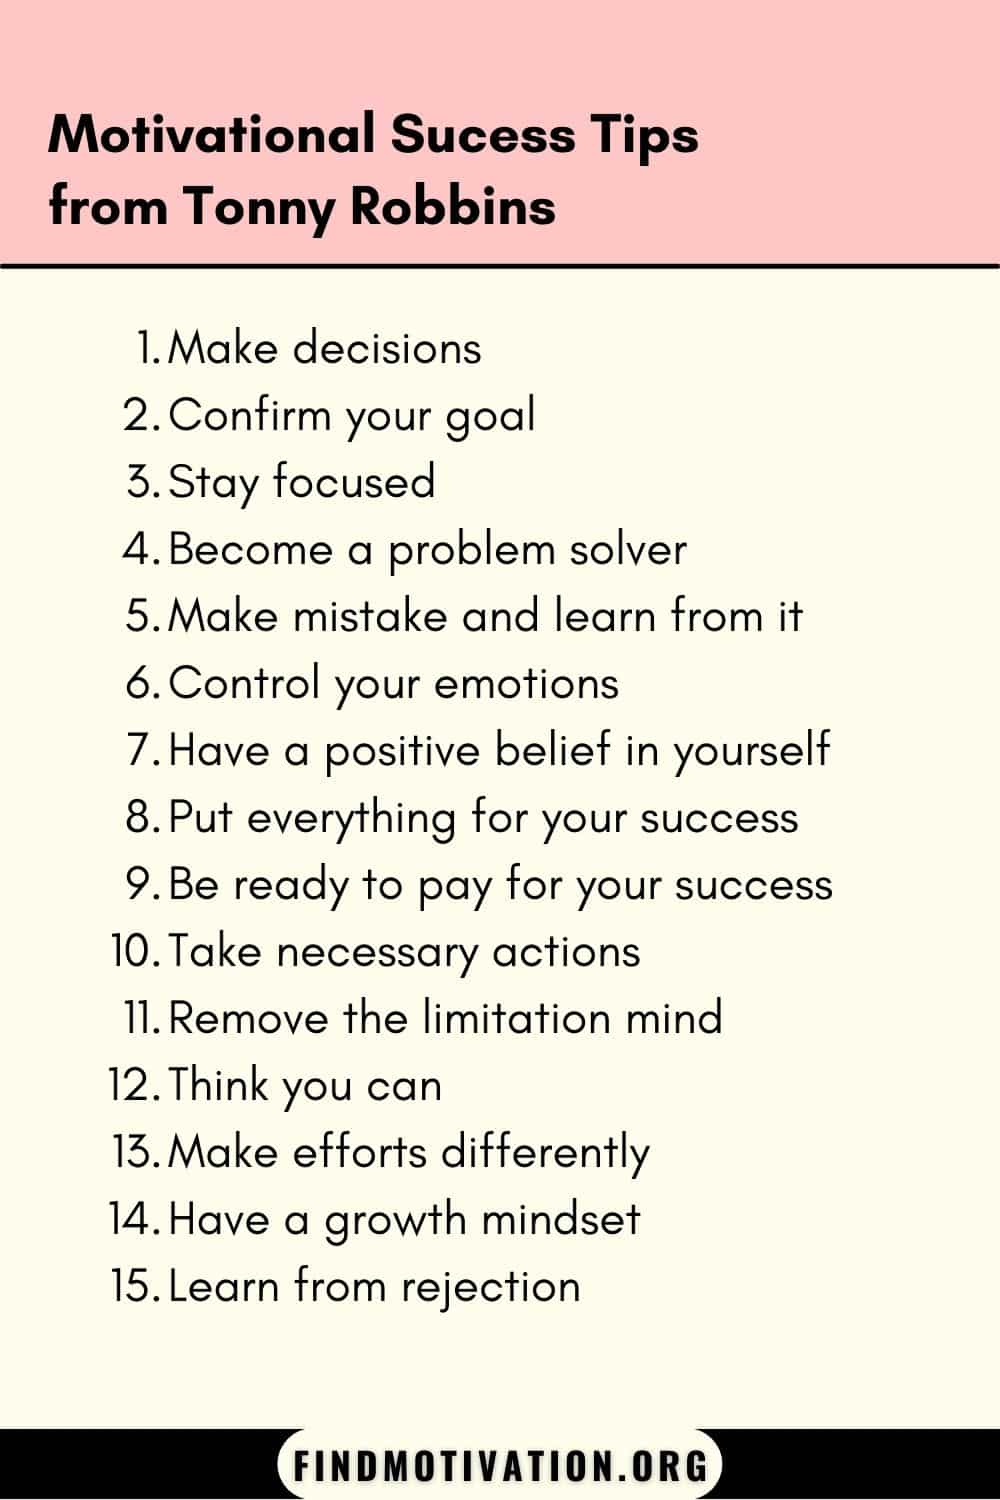 Tips to achieve success said by Tony Robbins